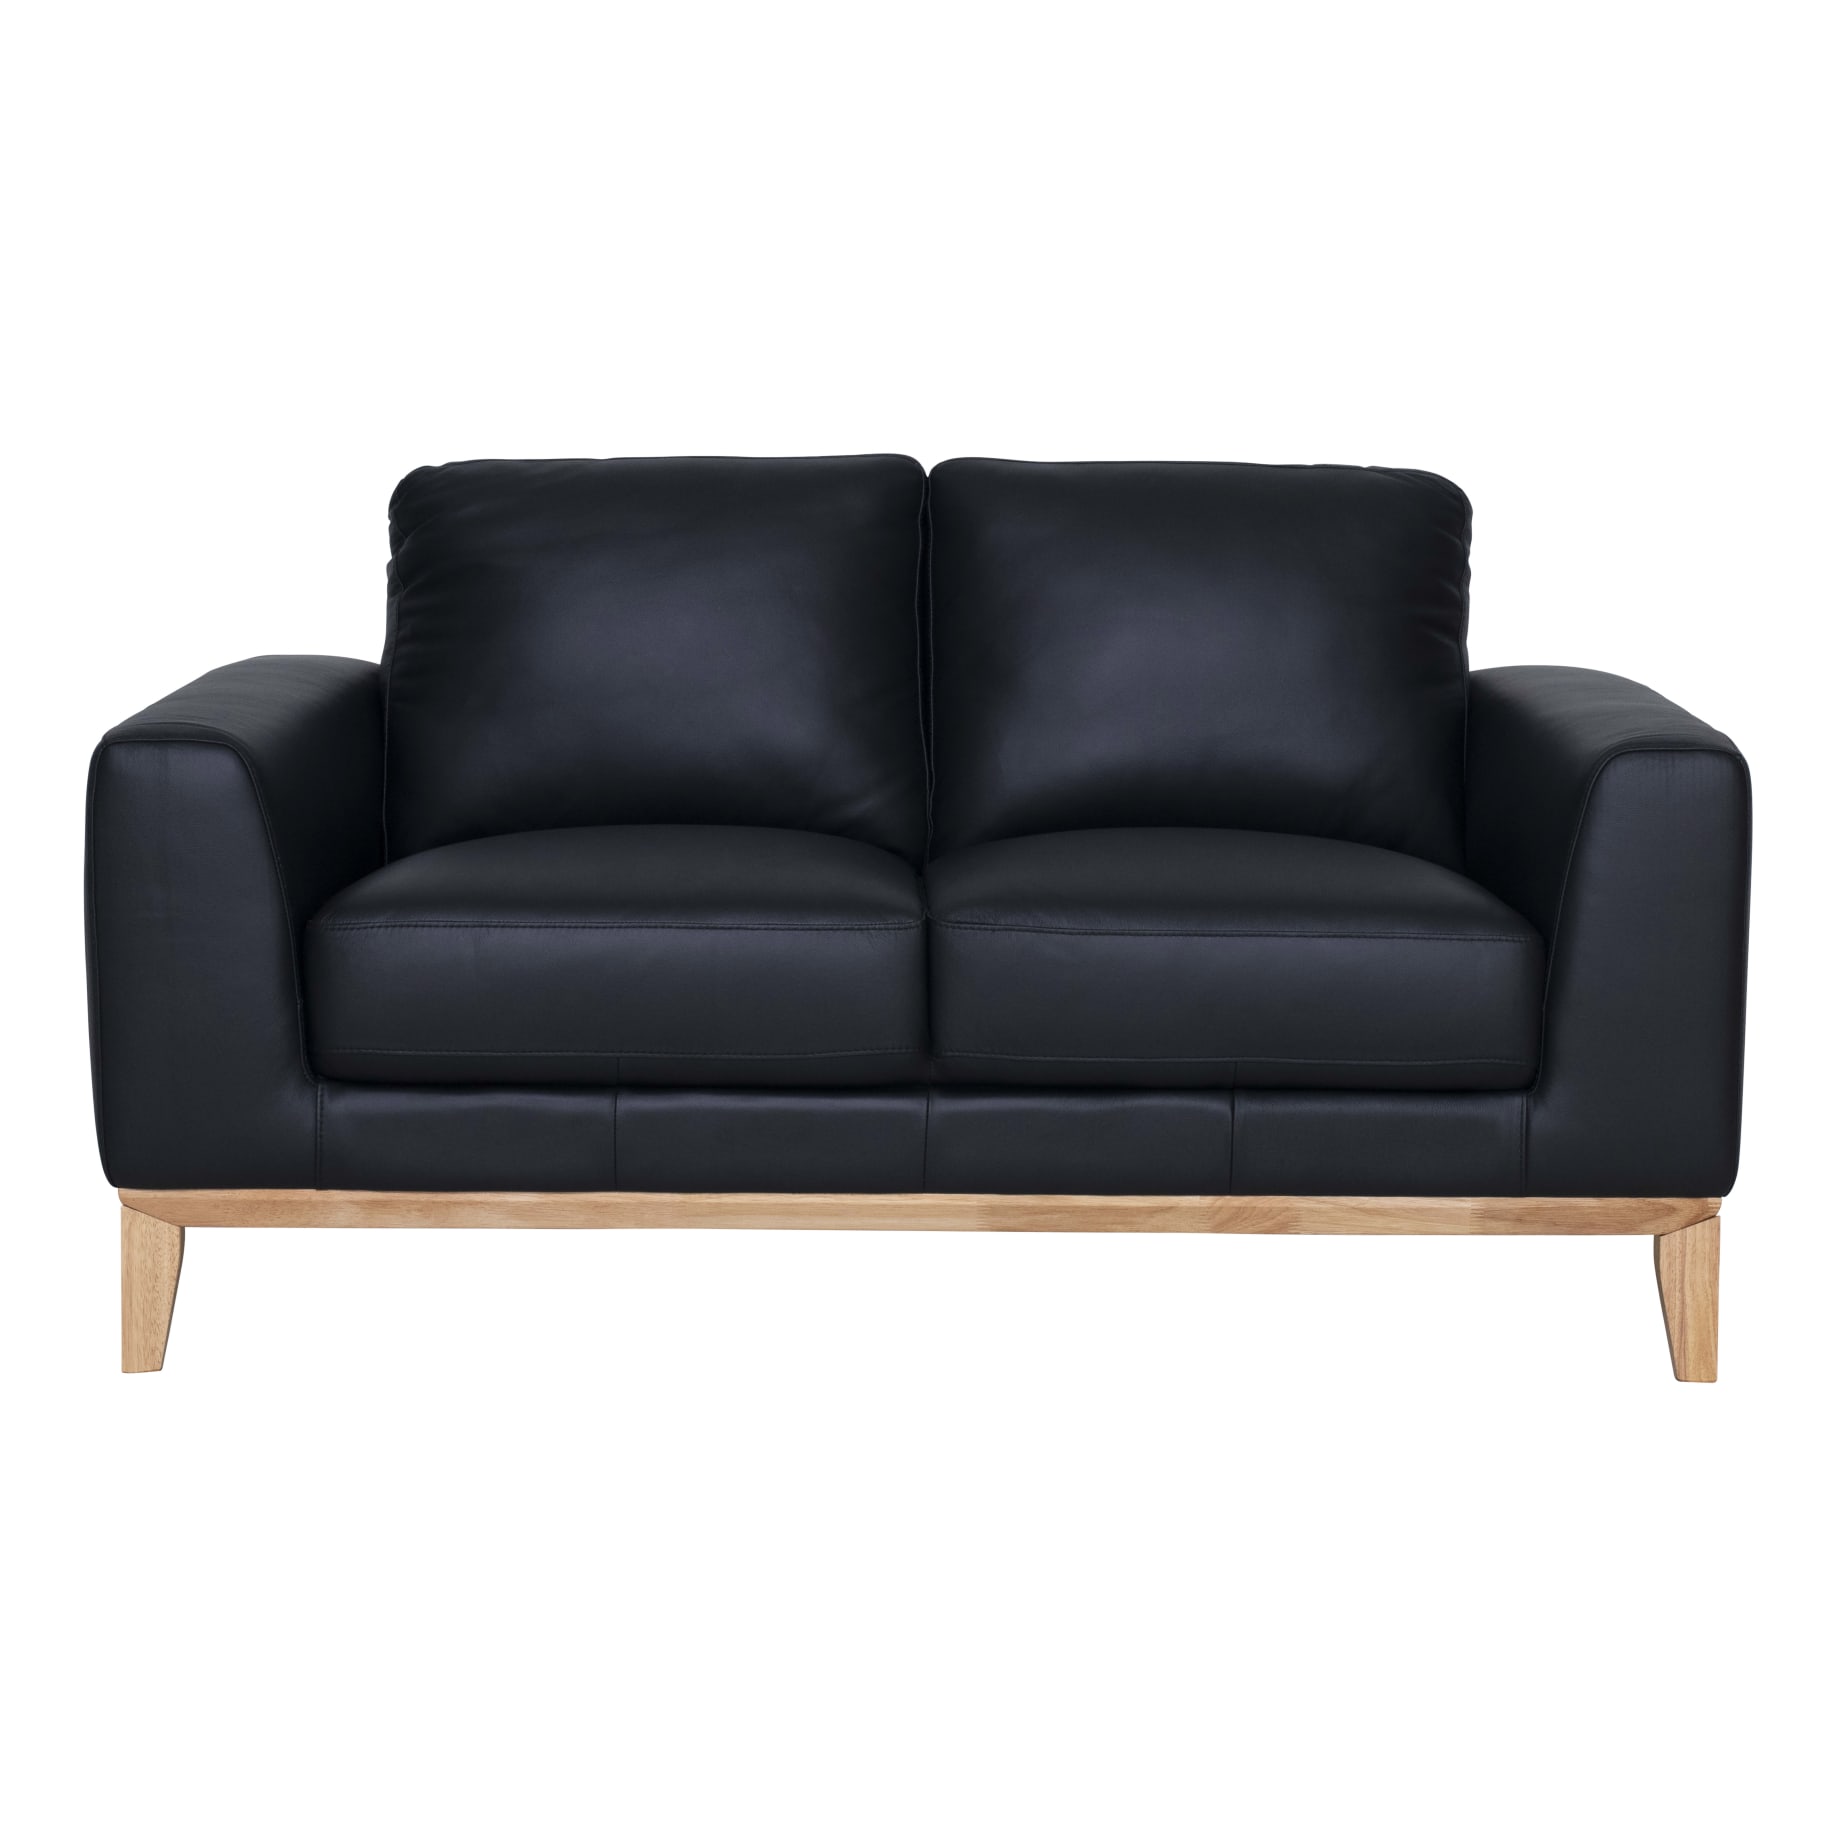 Dante 2 Seater Sofa in Leather Black